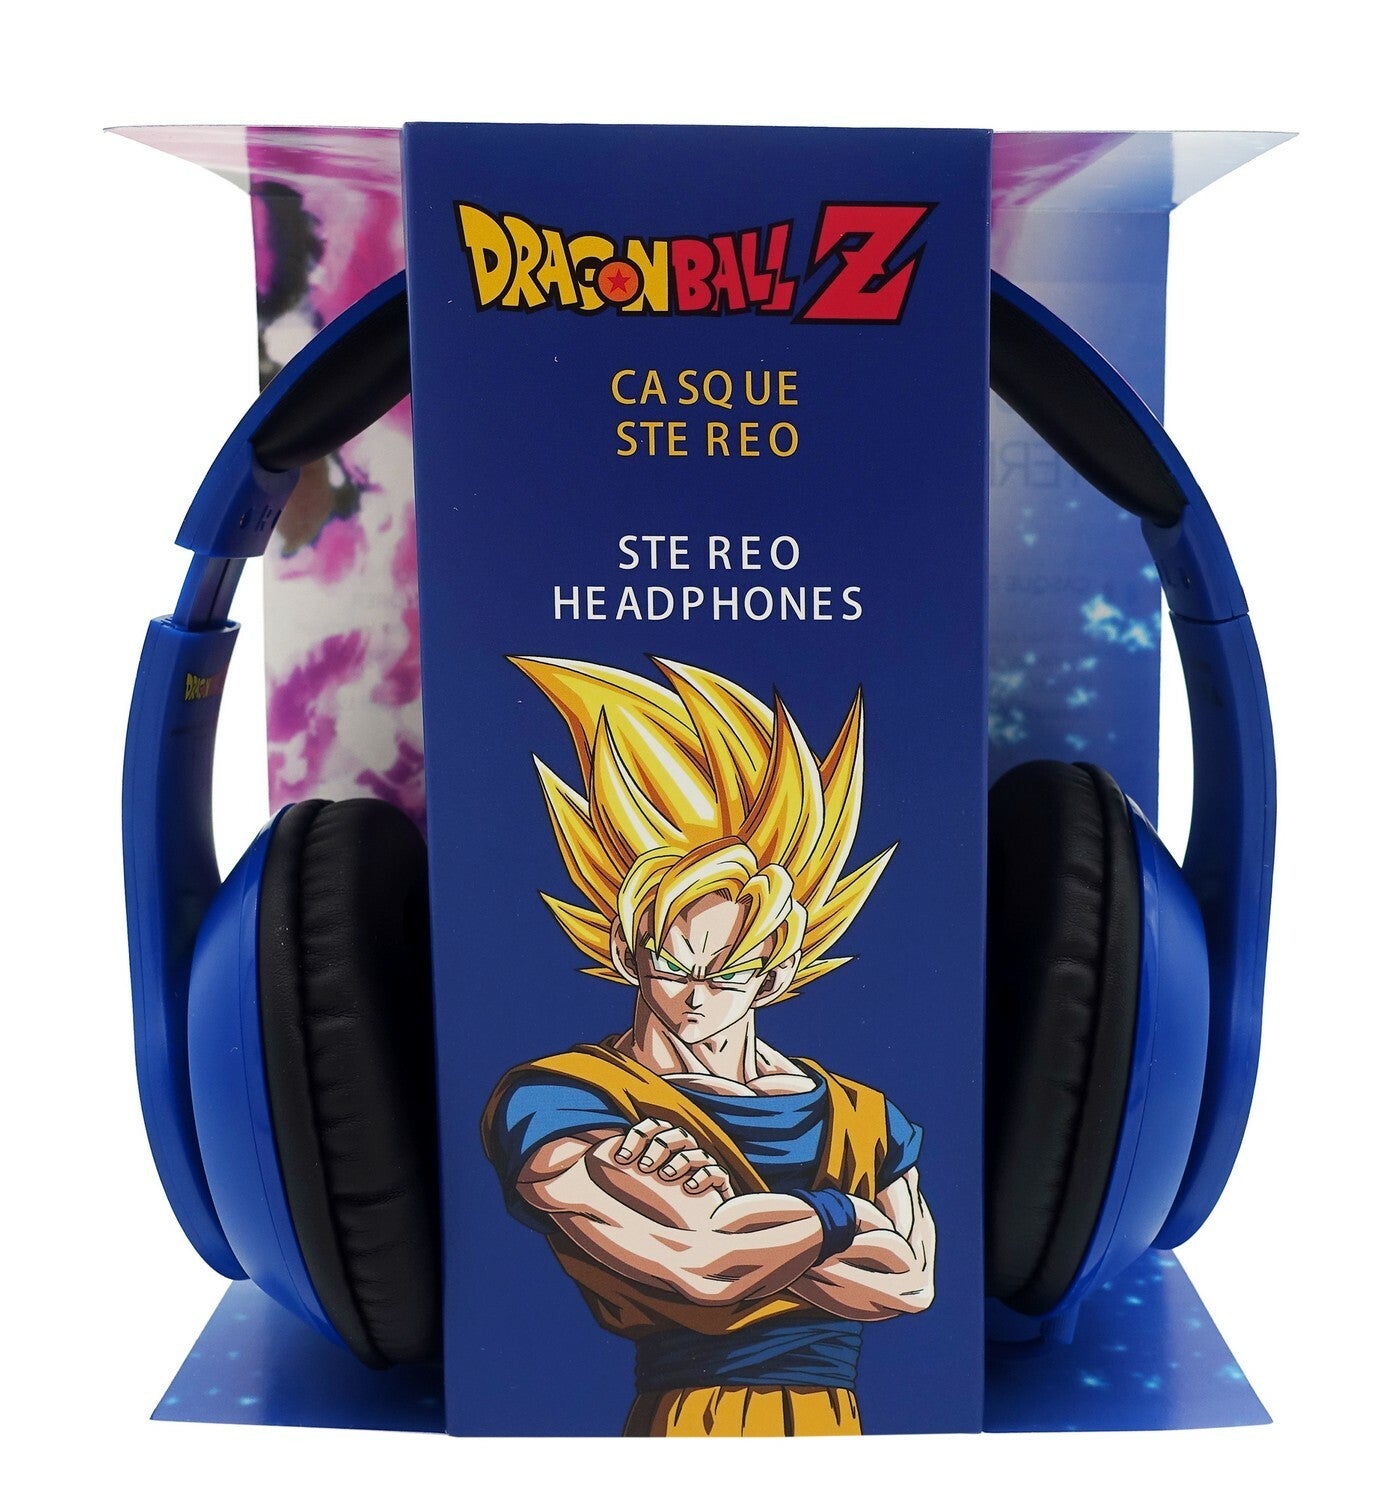  Dragon Ball Z: Goku and Vegeta Space Headphones  3760158113423